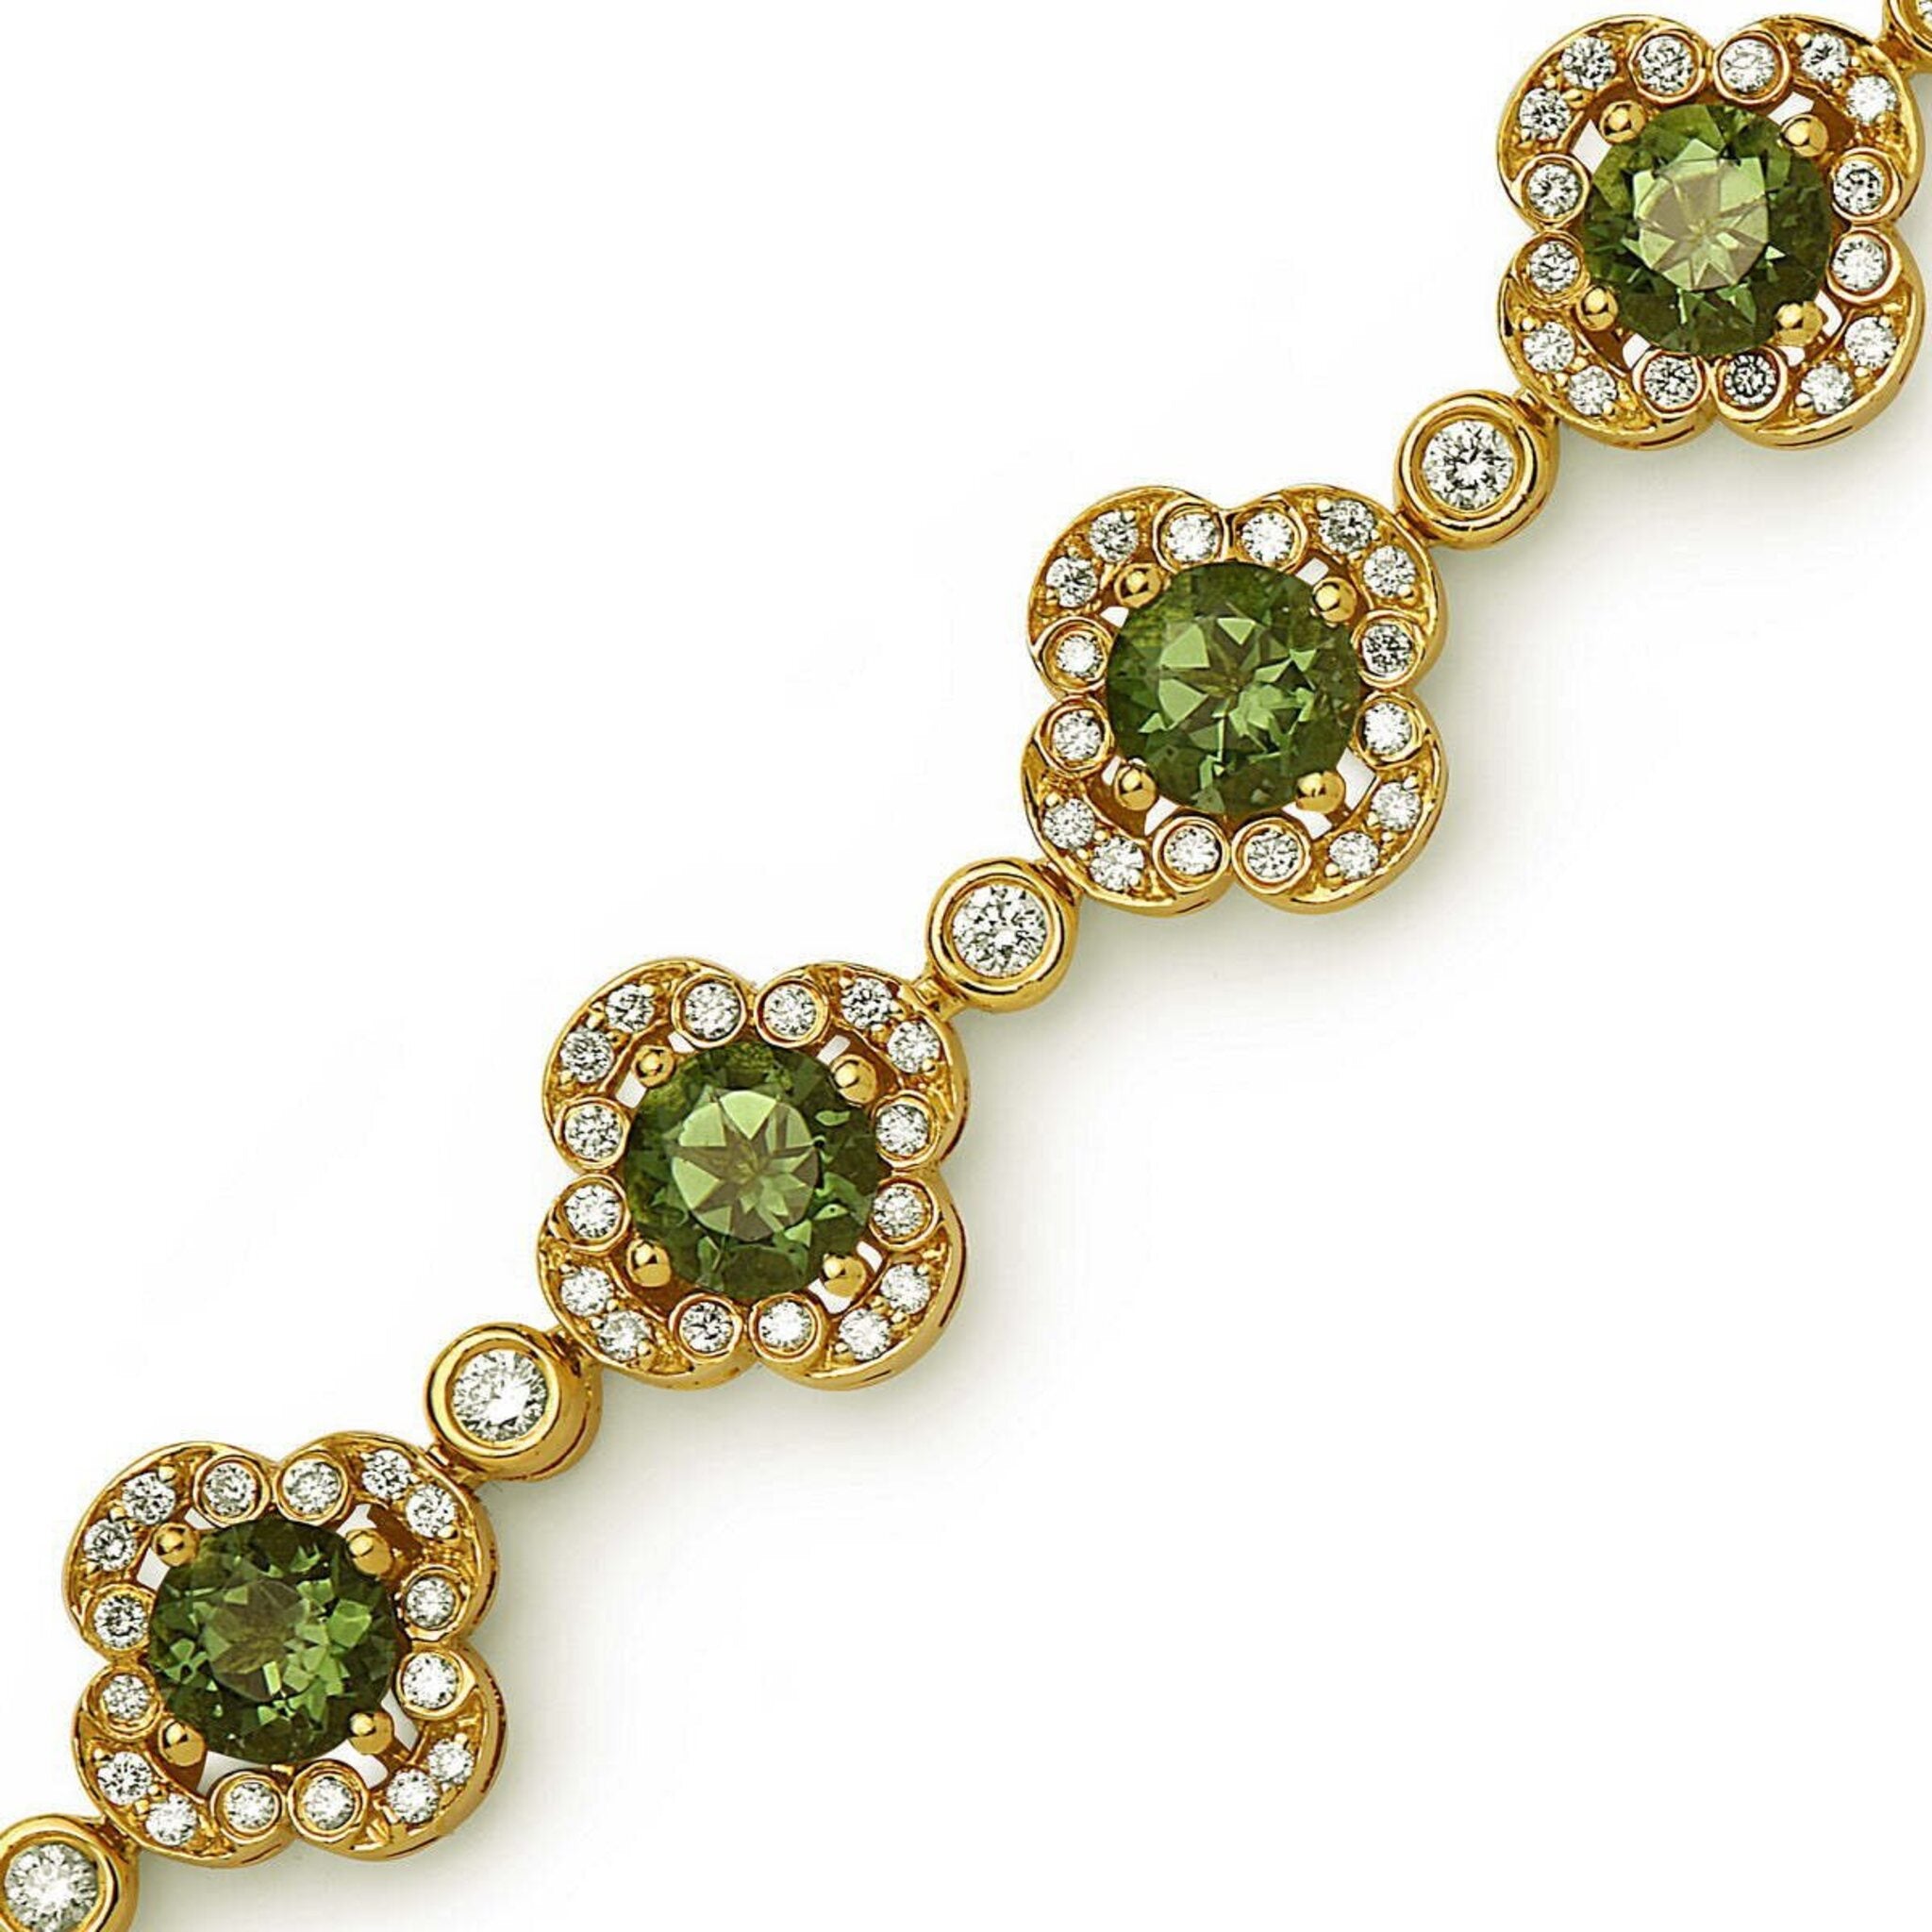 13mm Natural Green Tourmaline Rutilated Quartz Crystal Beads Bracelet 1236  | eBay